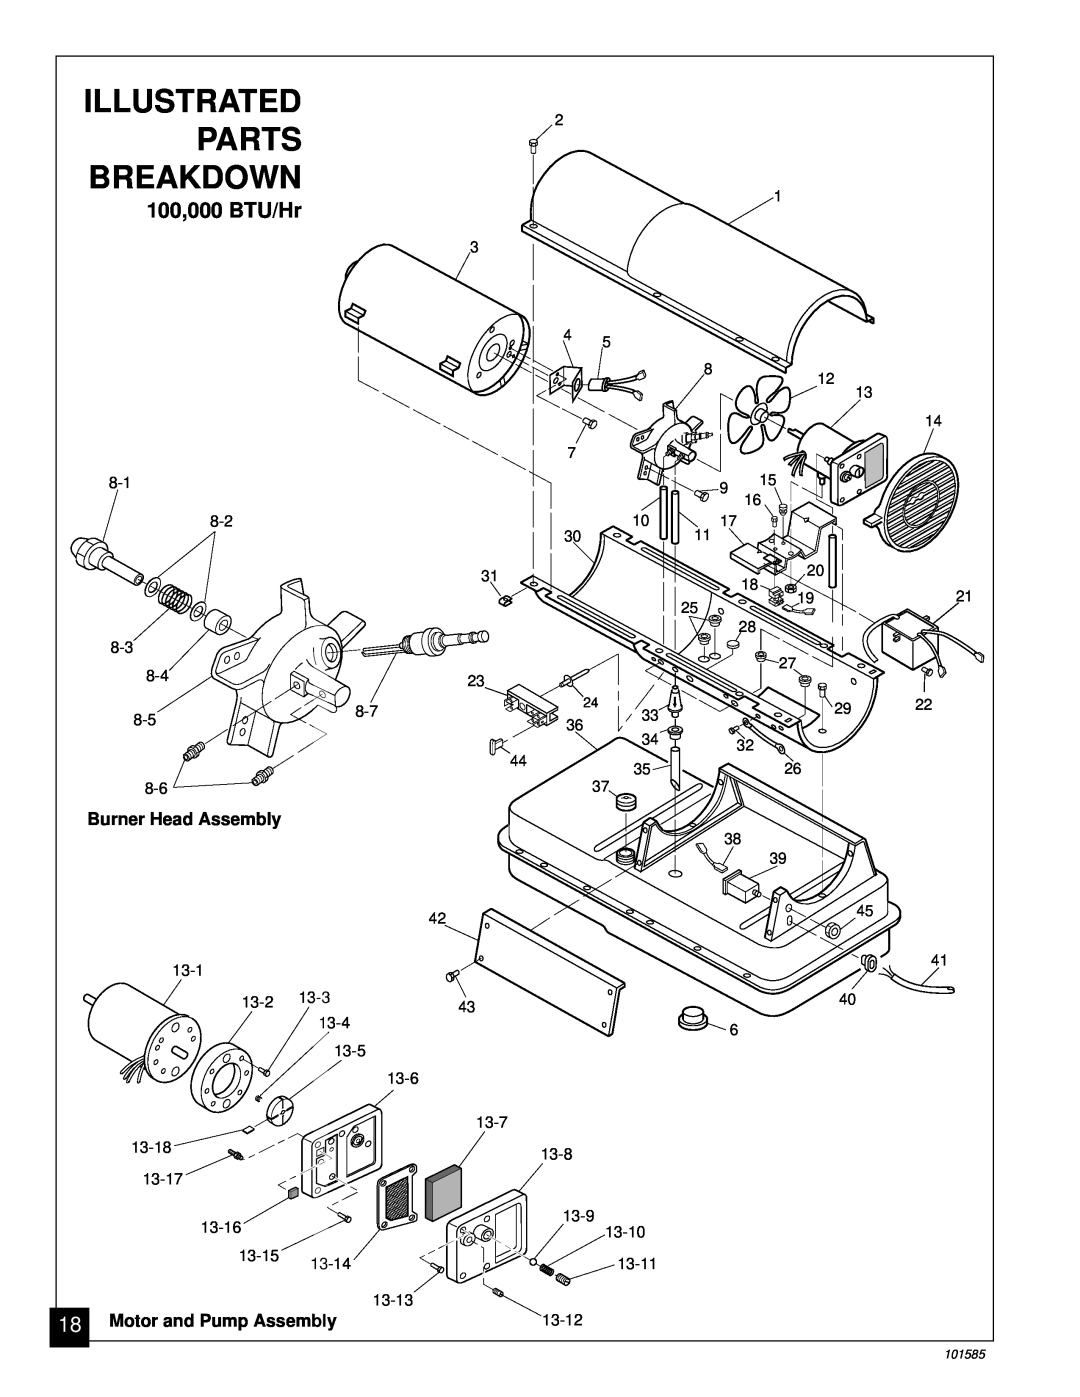 Master Lock 150000 BTU/Hr 100,000 BTU/Hr, Parts, Breakdown, Illustrated, Burner Head Assembly, Motor and Pump Assembly 